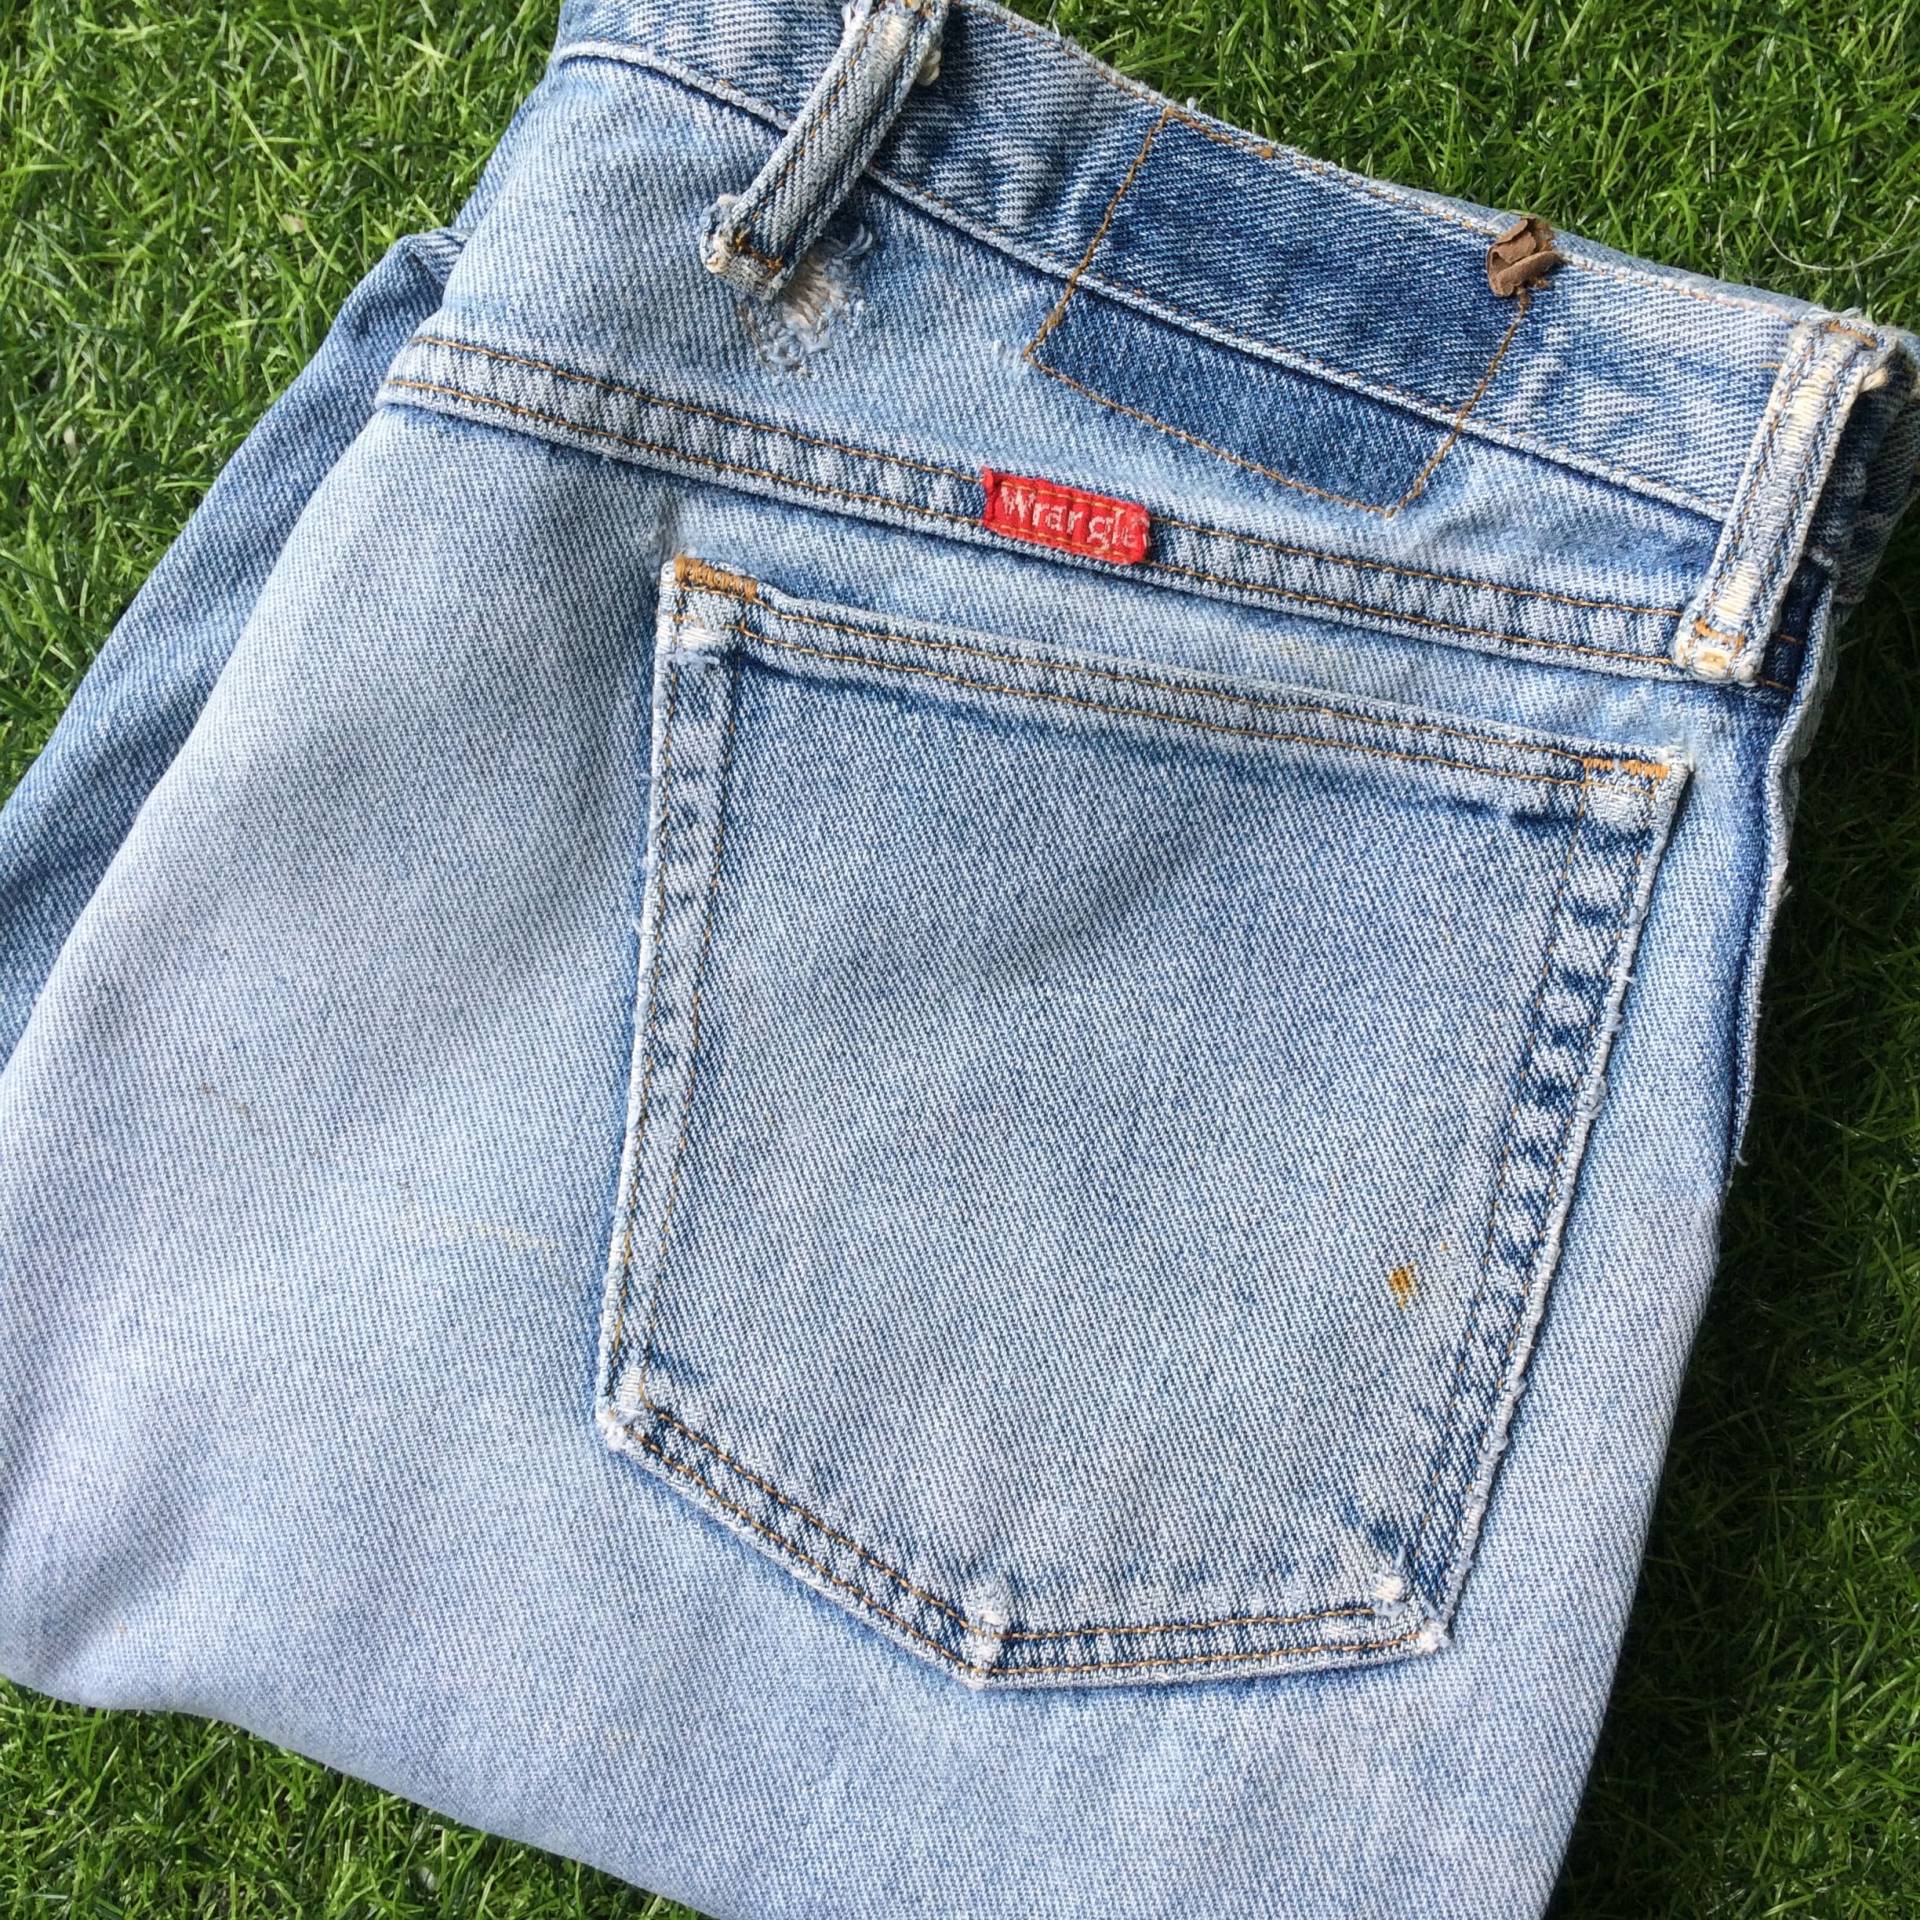 Größe 38 Vintage 90Er Jahre Plus Size Wrangler Western Distressed Jeans High Waist Faded Ripped Mom Jeans. 38x29cm von BackyardFashion